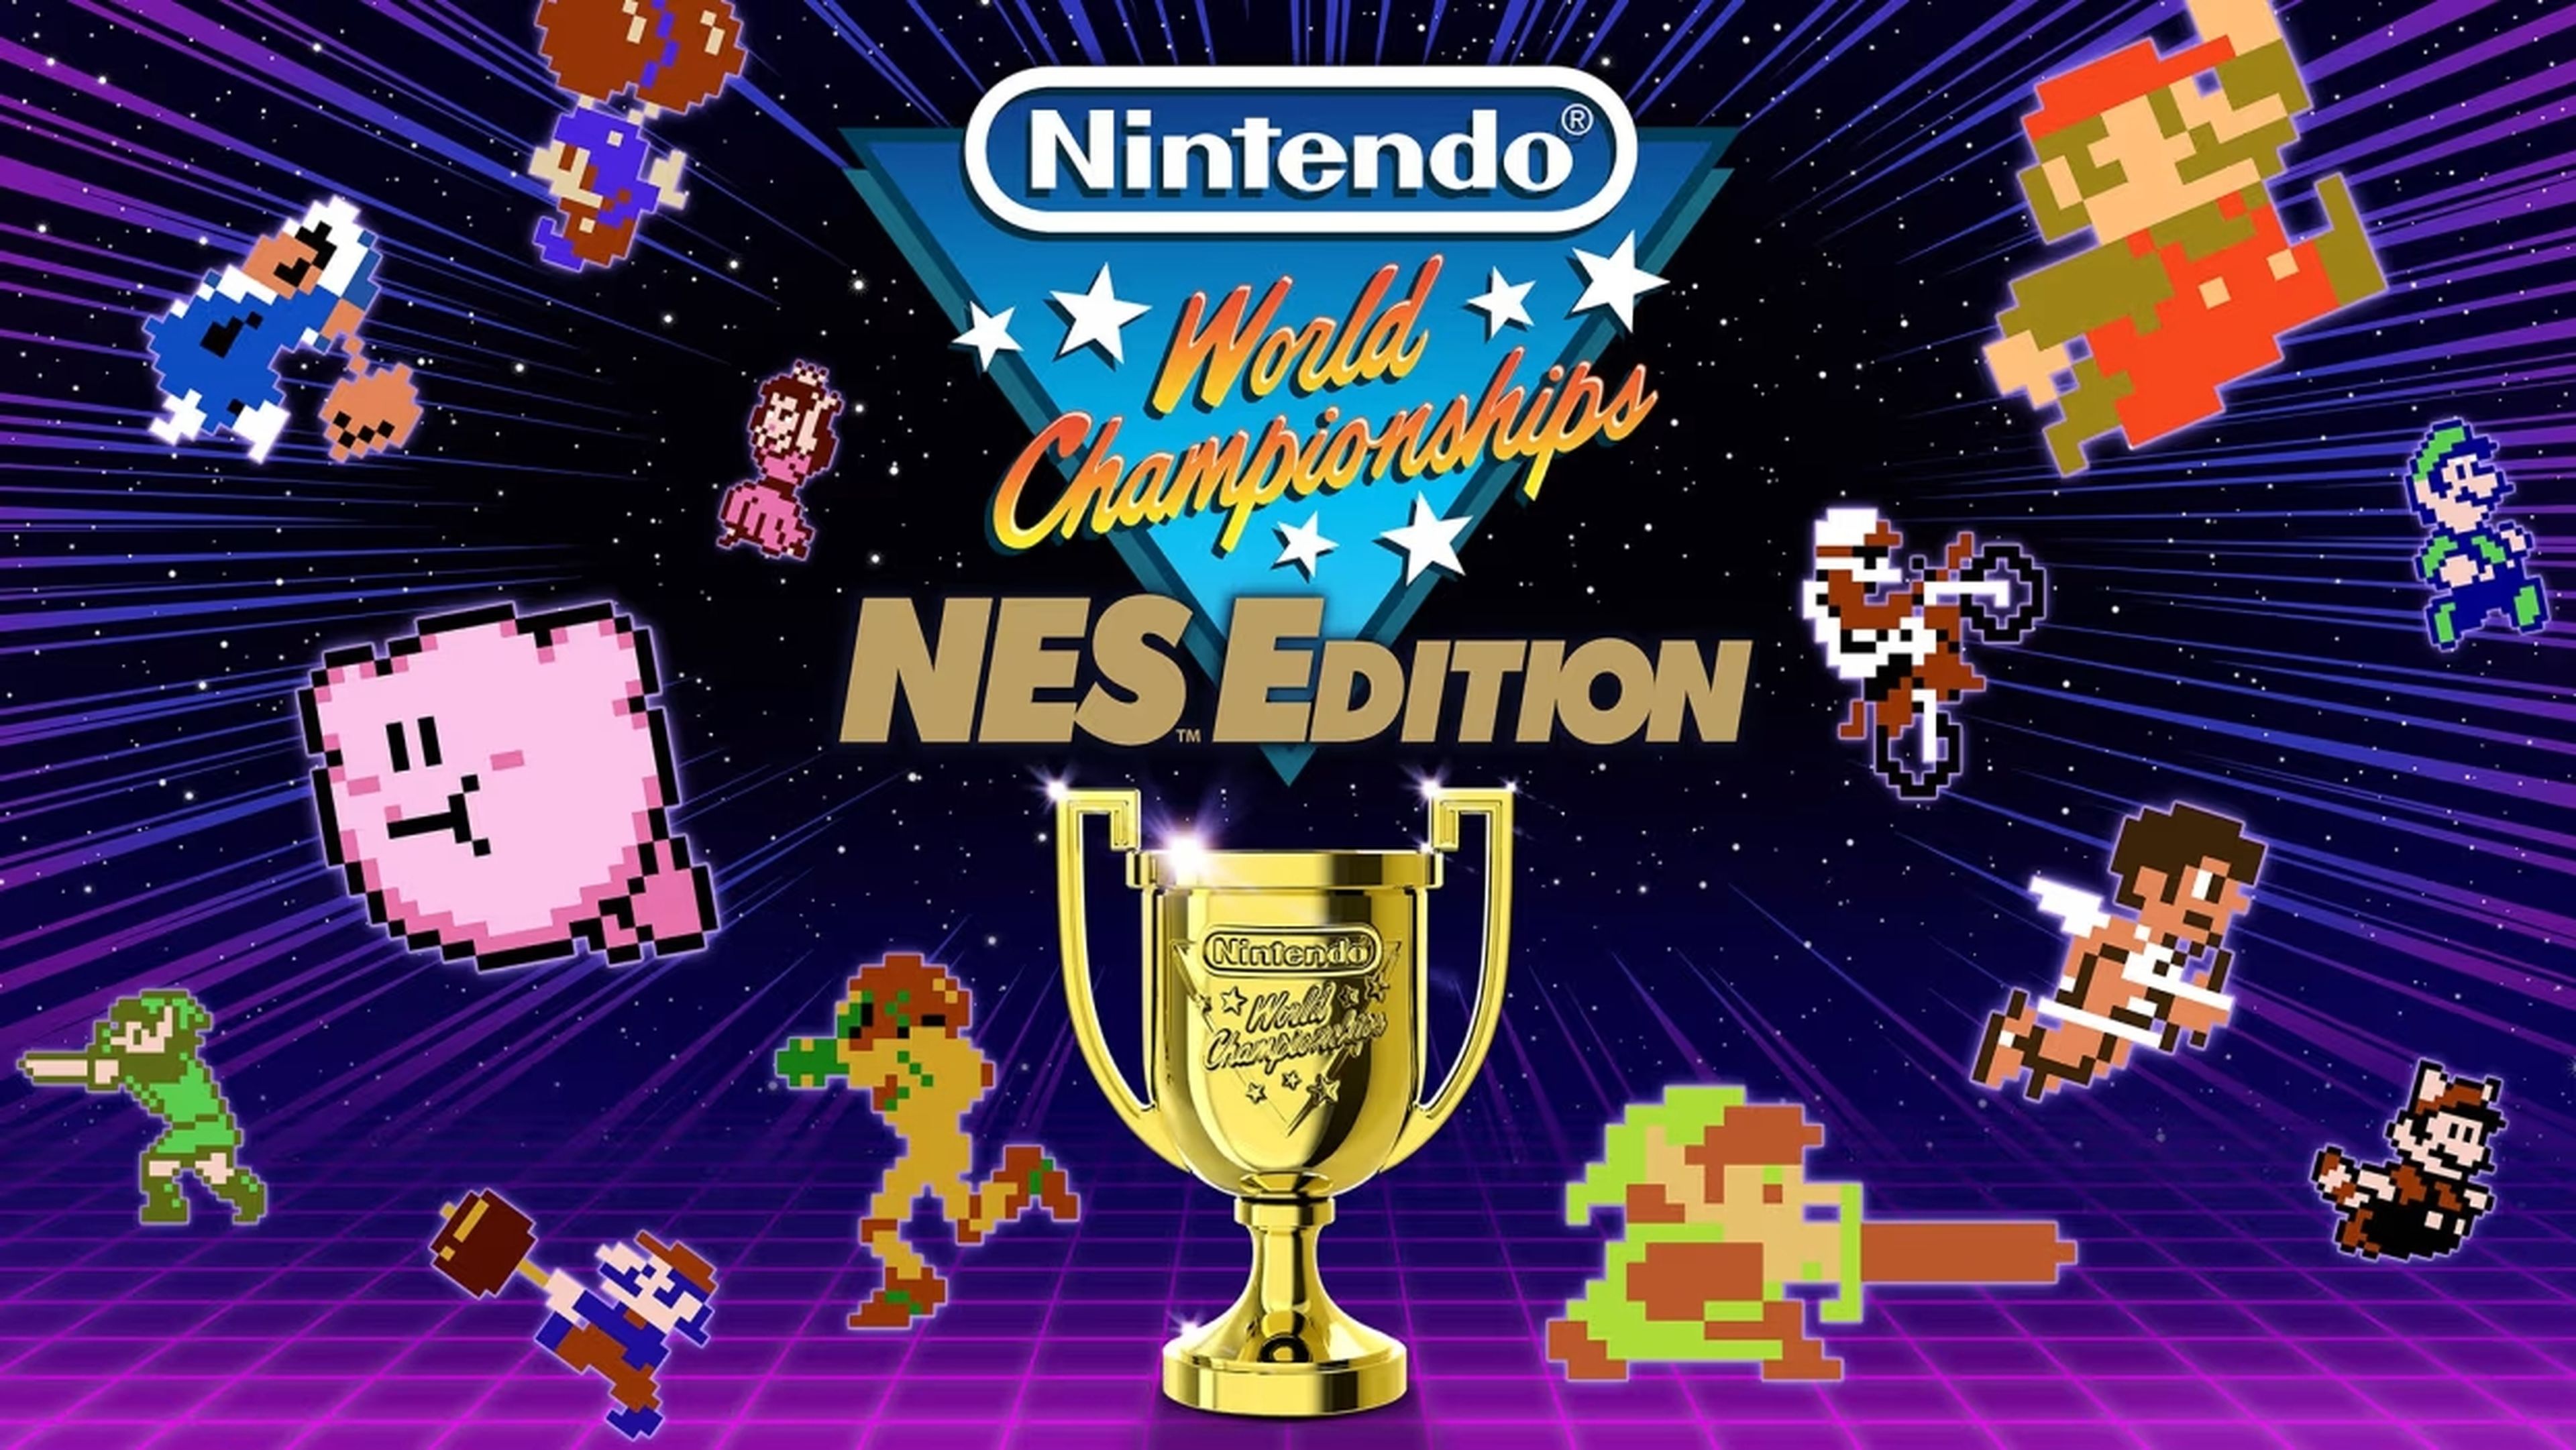 Nintendo World Championship NES Edition